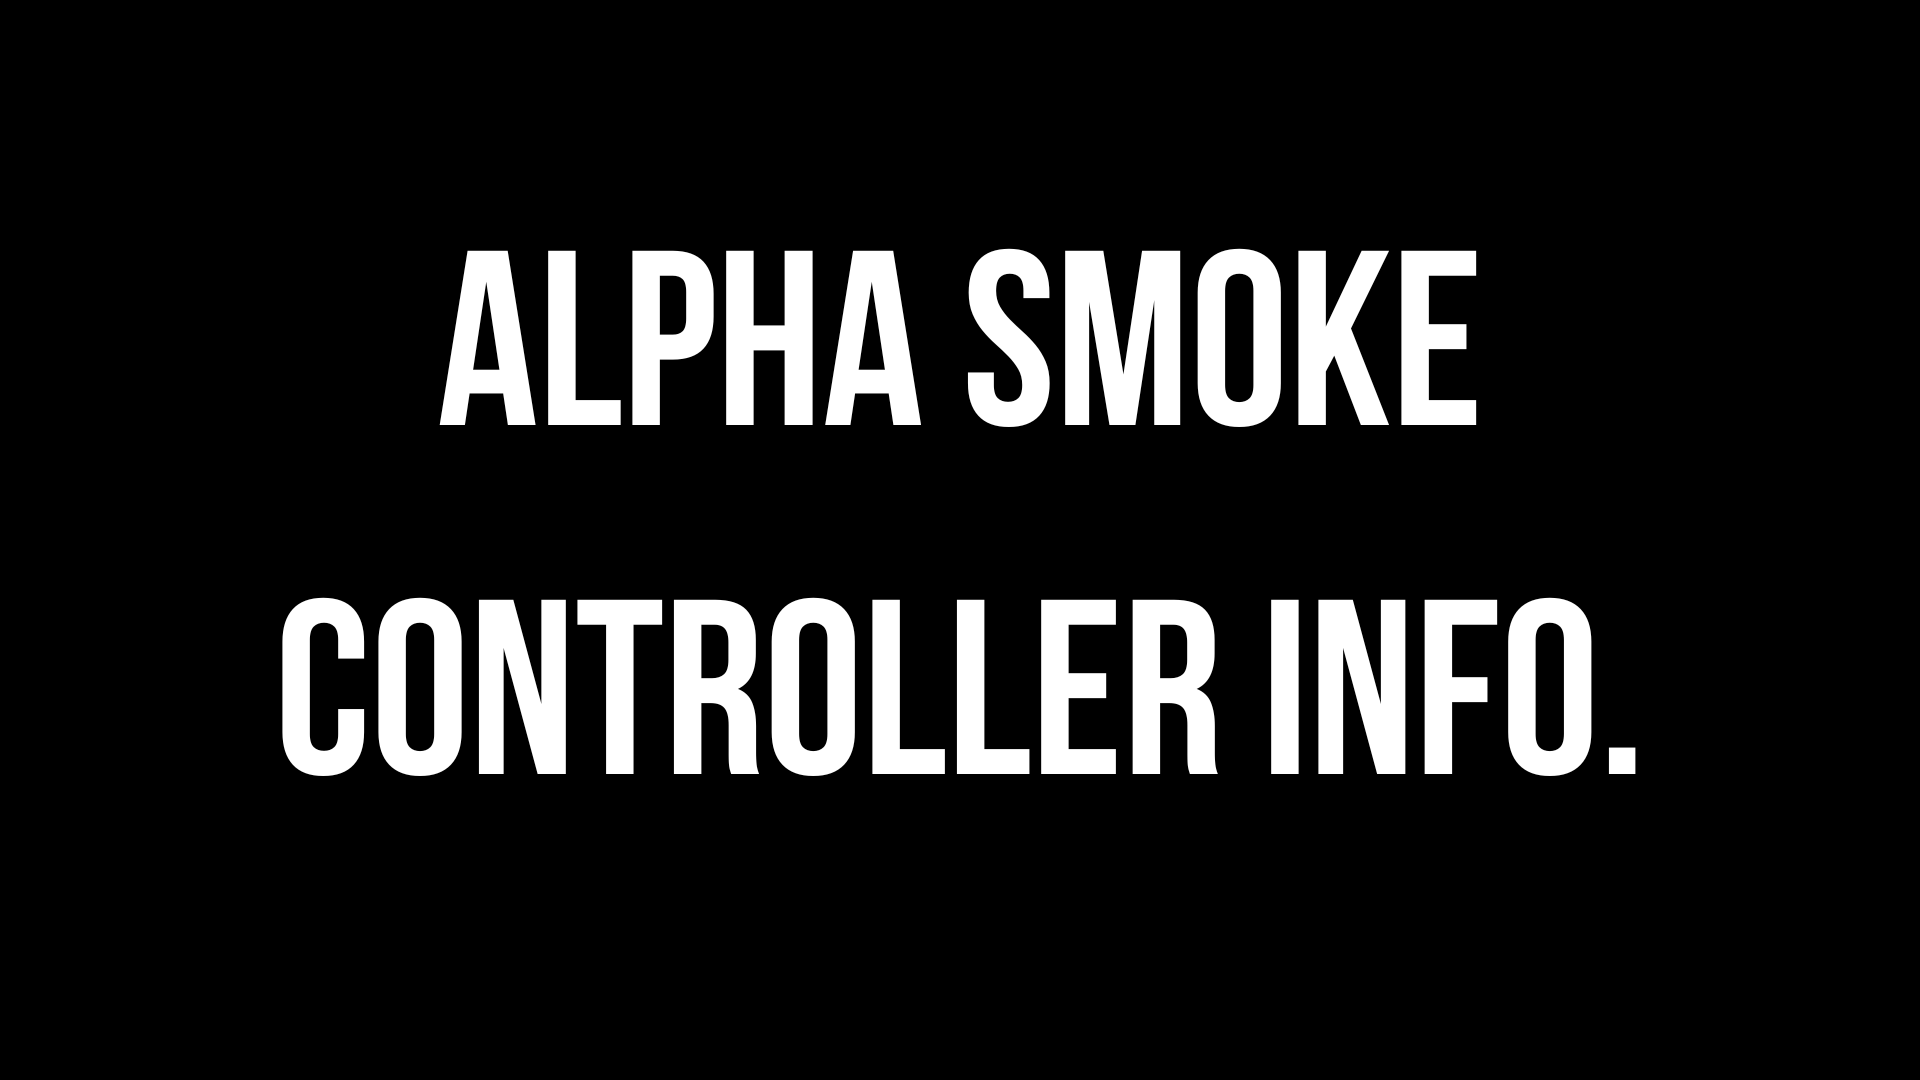 Alpha Smoke Controller Info.